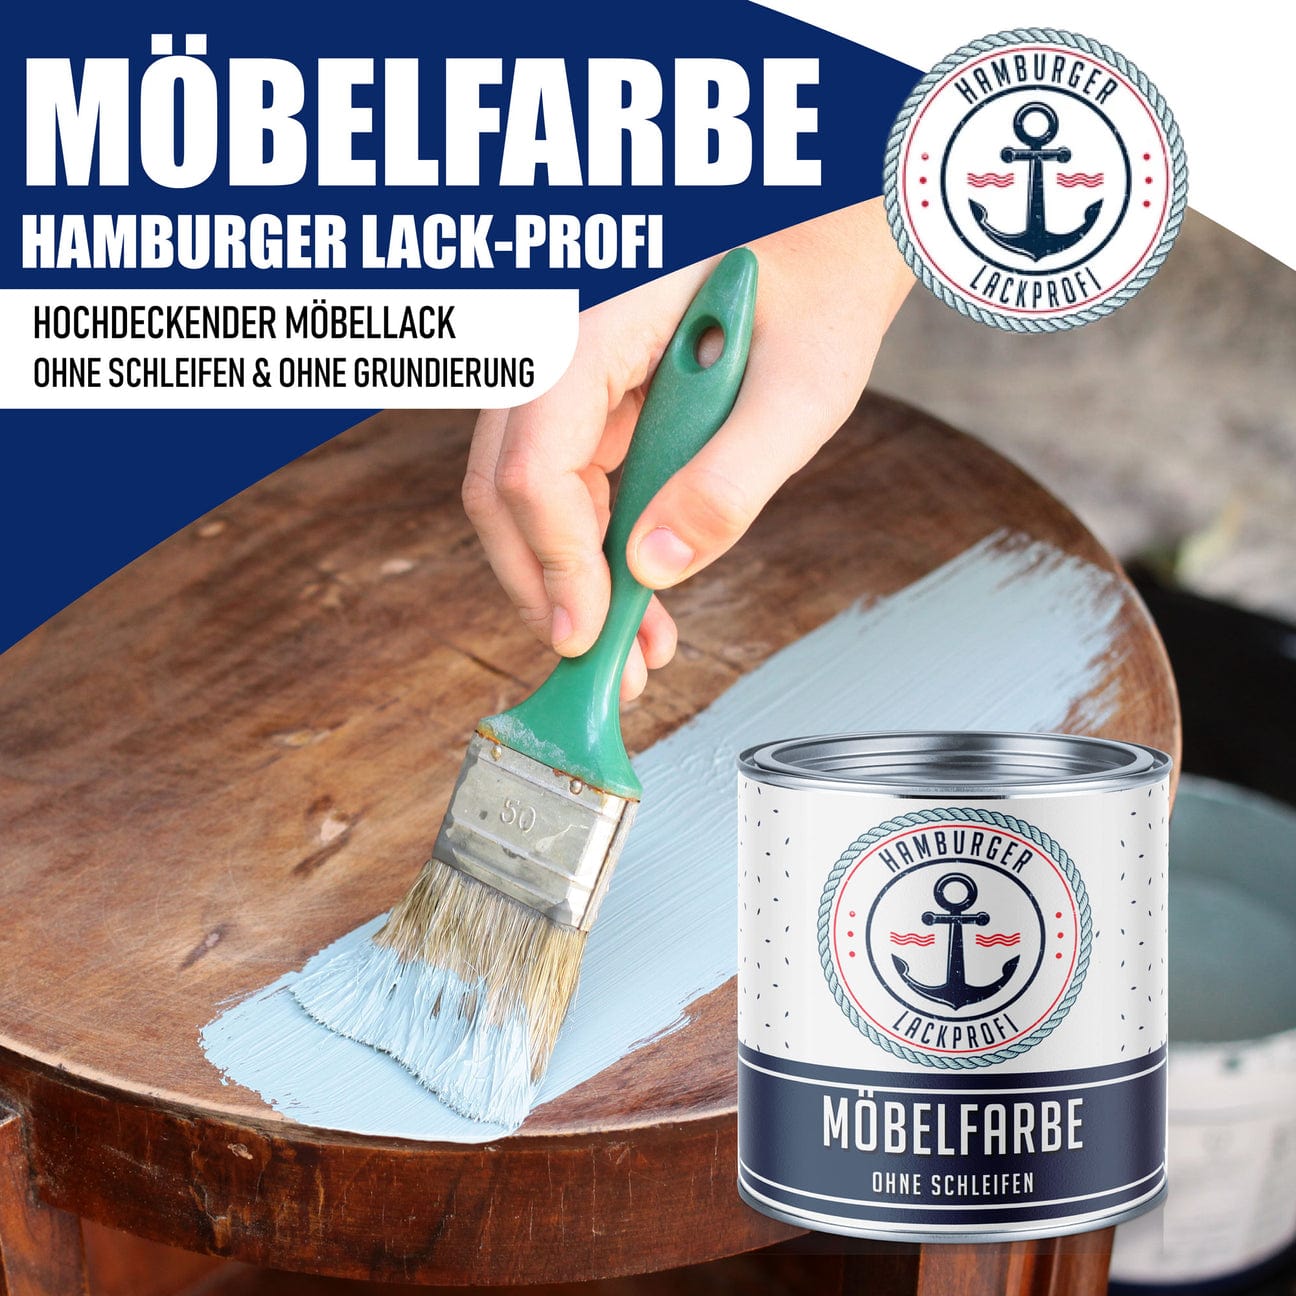 Hamburger Lack-Profi Möbelfarbe ohne Schleifen RAL 5011 Stahlblau - Möbellack Hamburger Lack-Profi